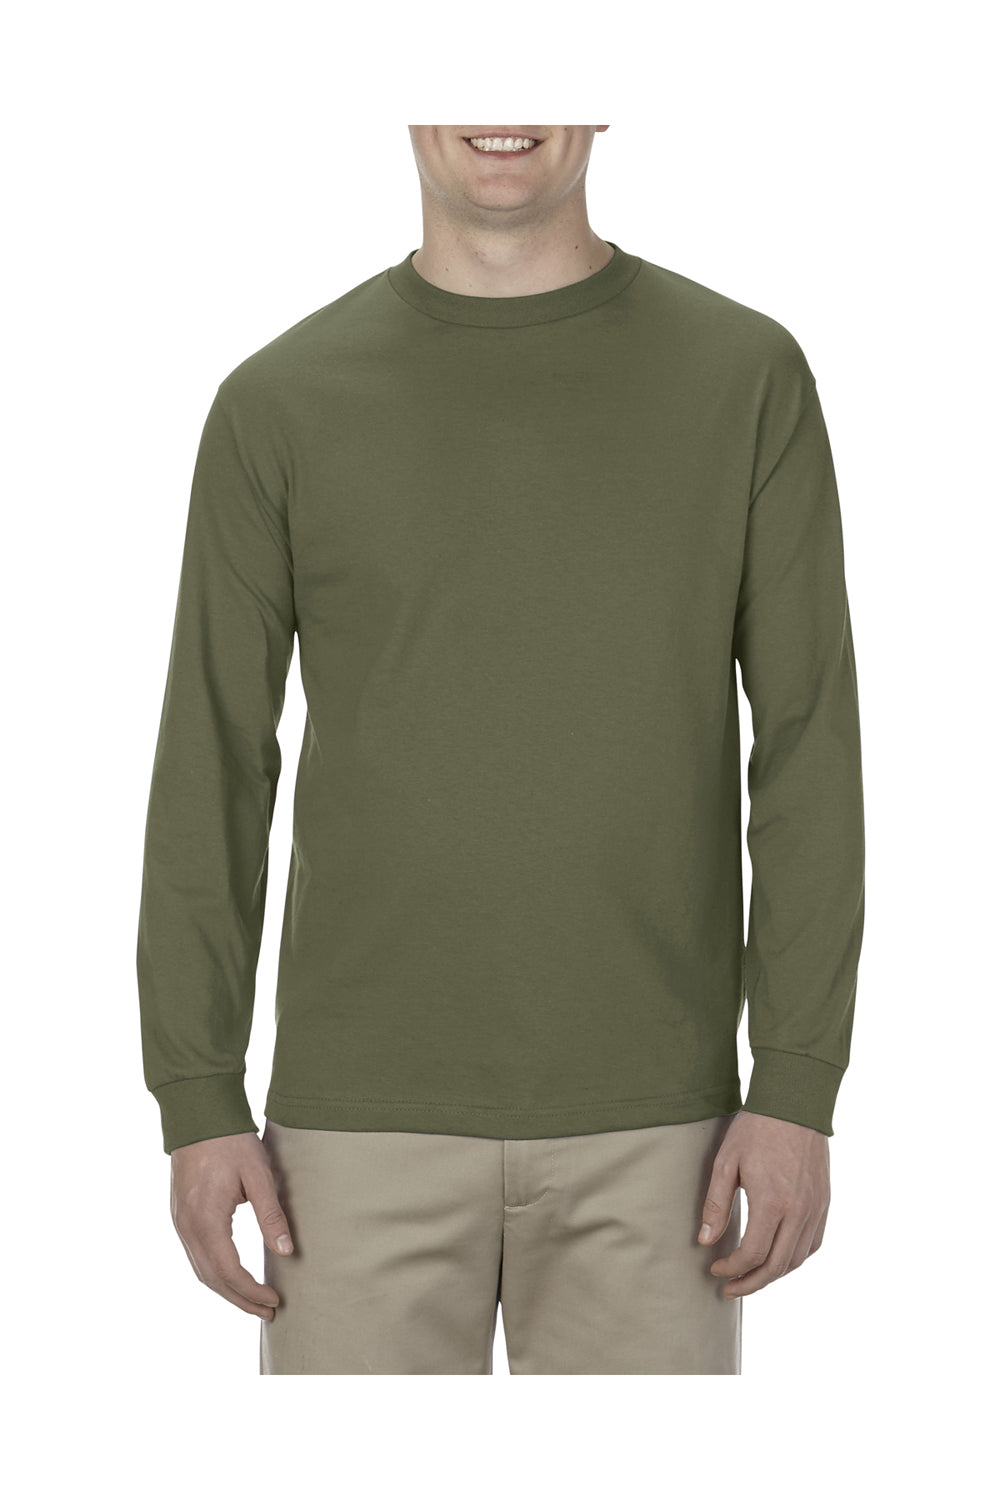 Alstyle AL1304 Mens Long Sleeve Crewneck T-Shirt Military Green Front